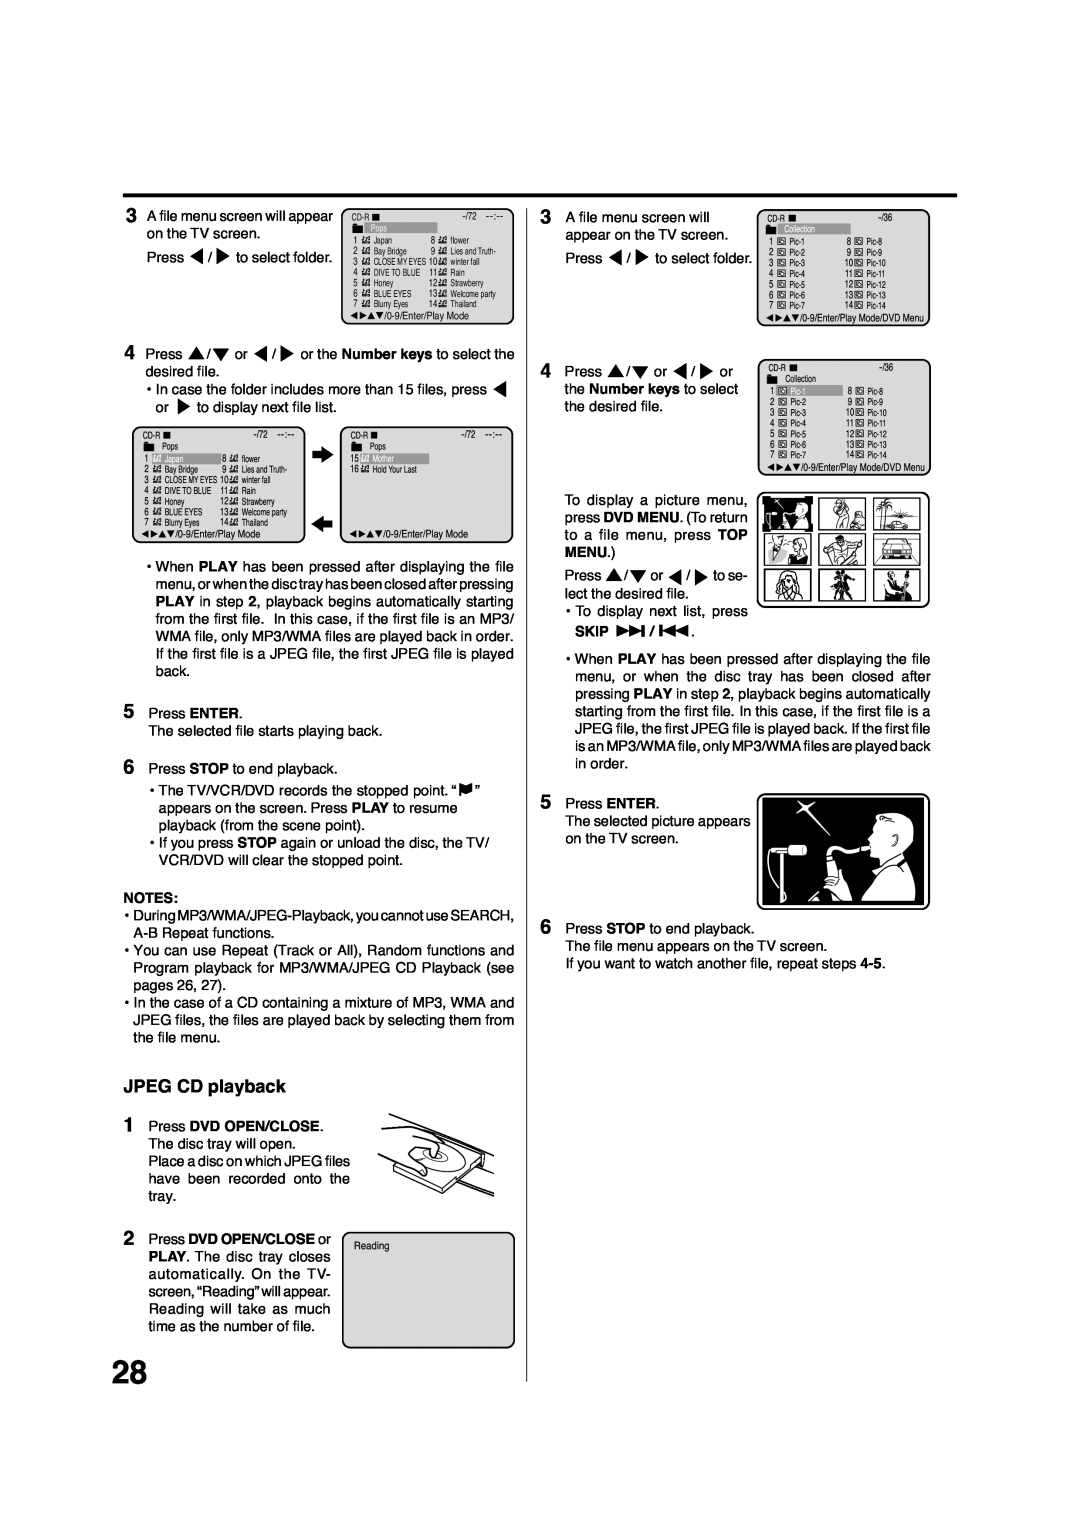 Pioneer DV-PT100 JPEG CD playback, Press DVD OPEN/CLOSE. The disc tray will open, Skip, A file menu screen will appear 